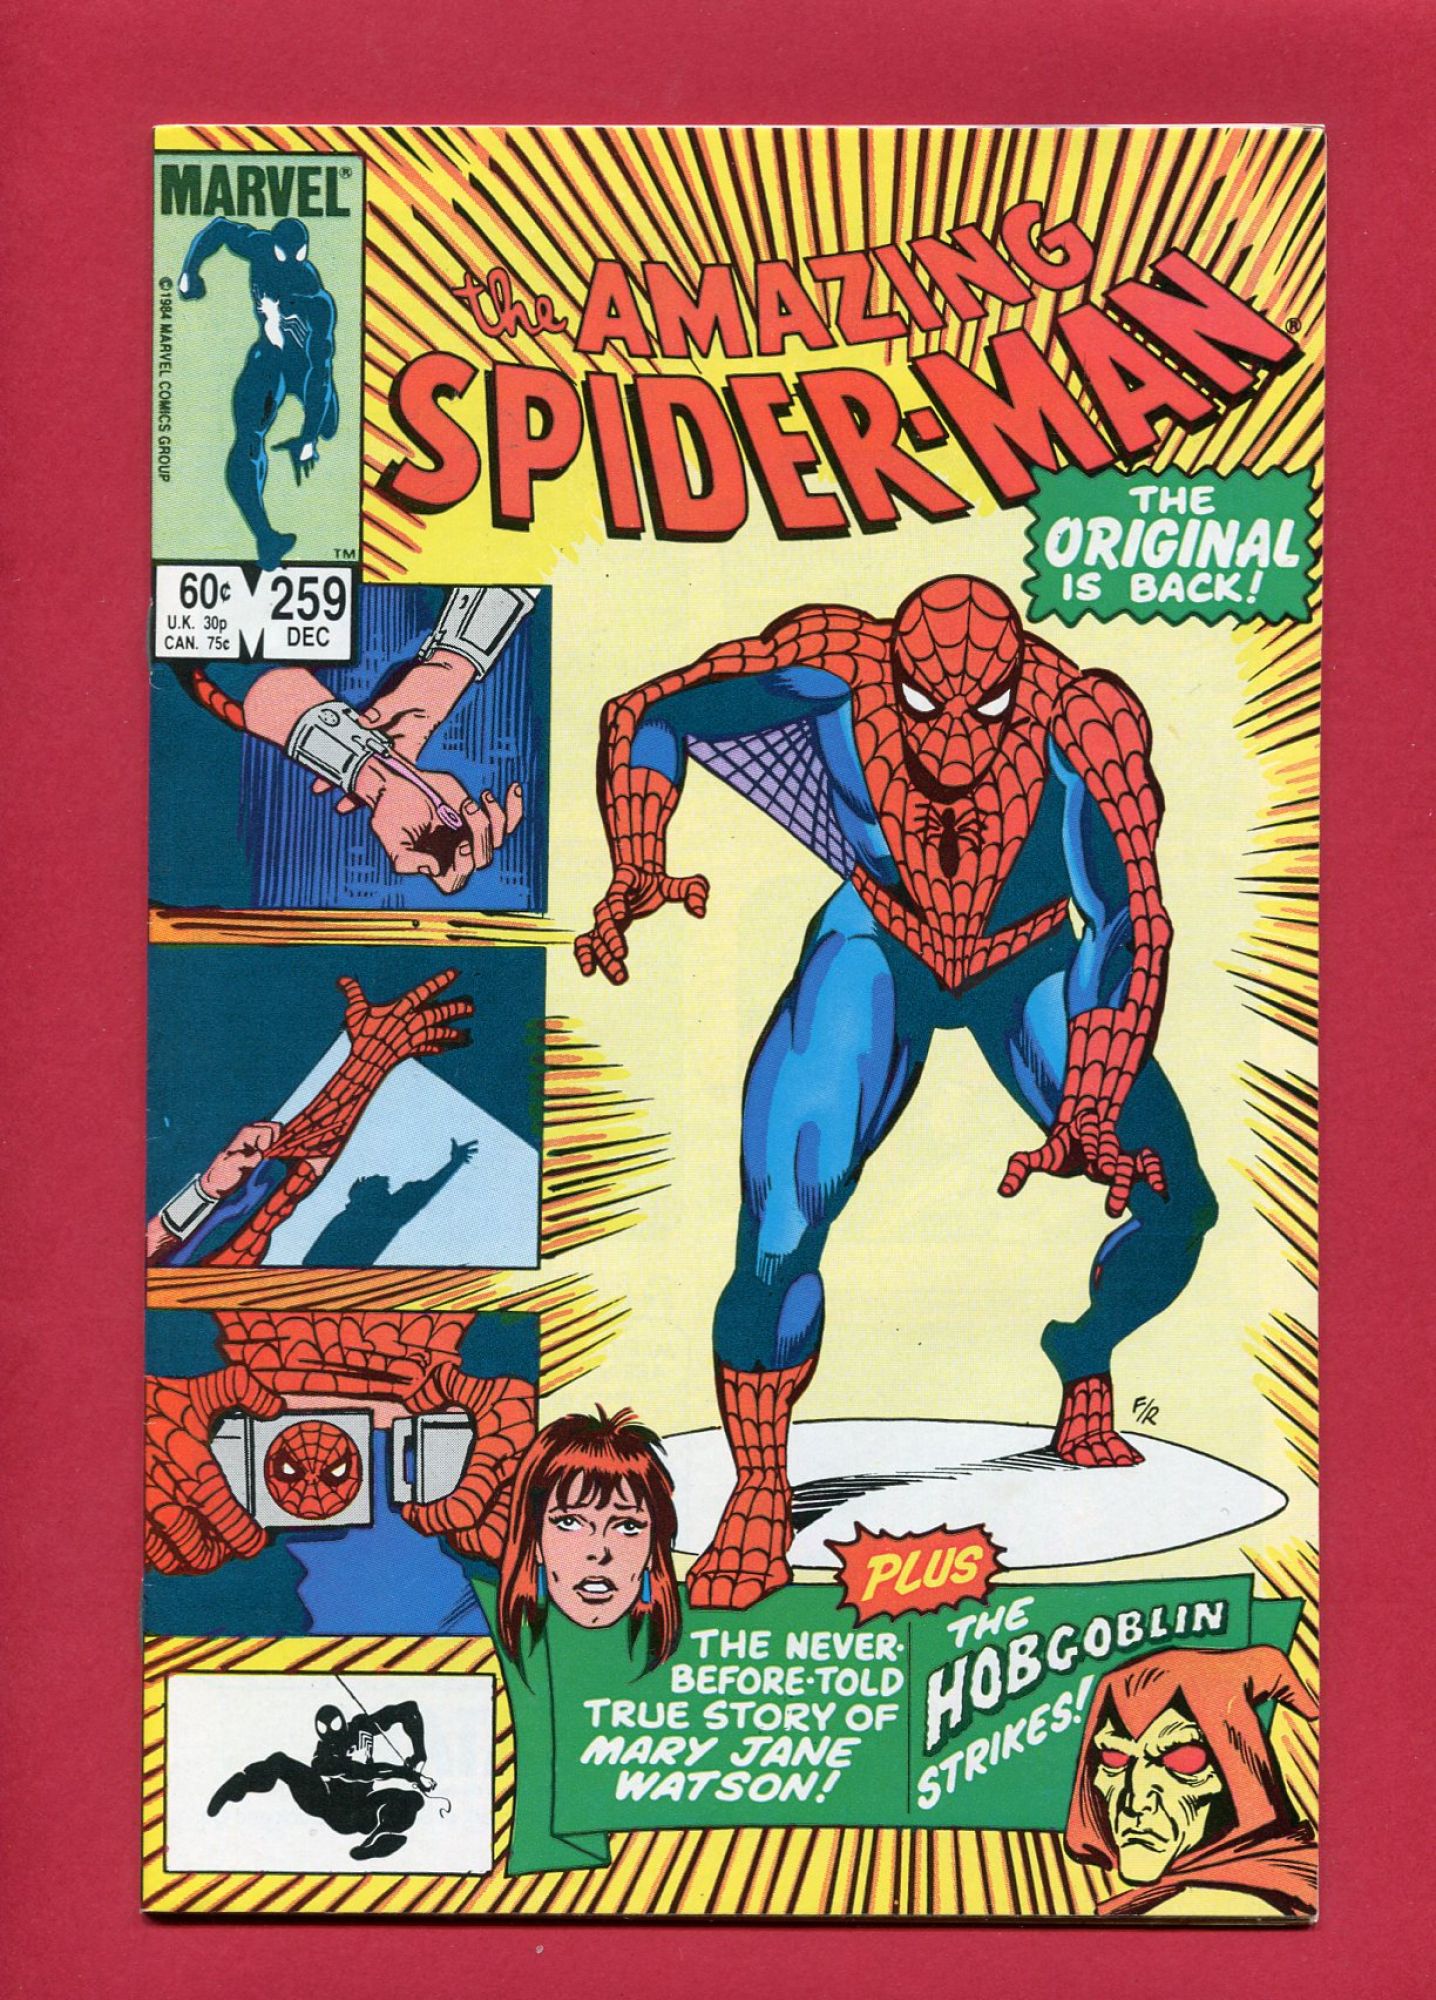 Amazing Spider-Man #259, Dec 1984, 8.5 VF+